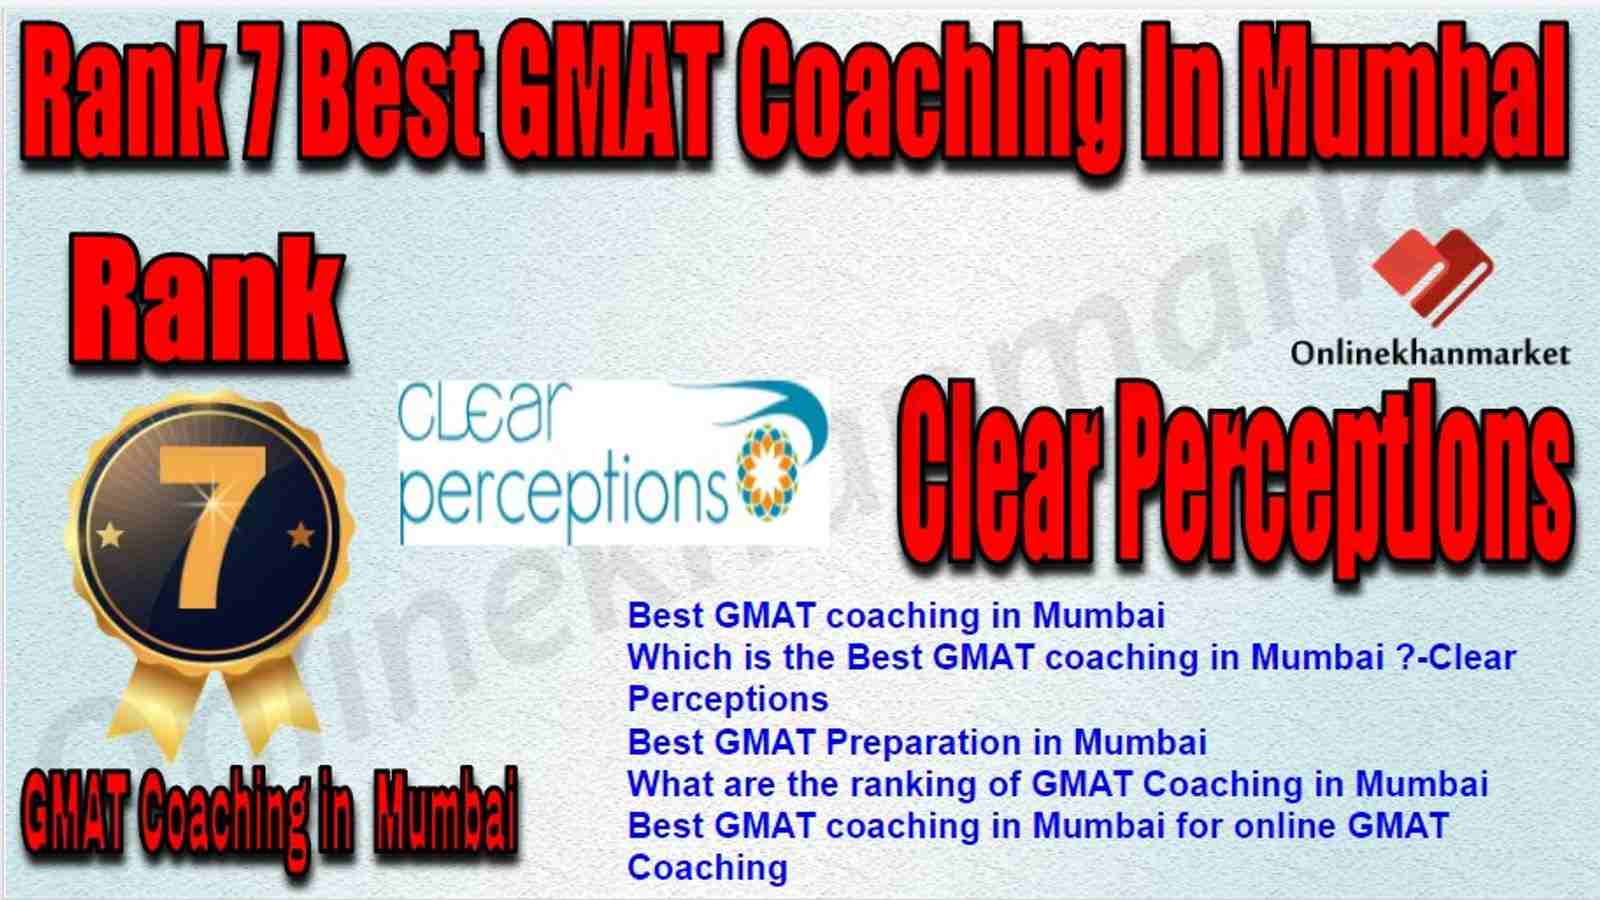 Rank 7 Best GMAT Coaching in Mumbai